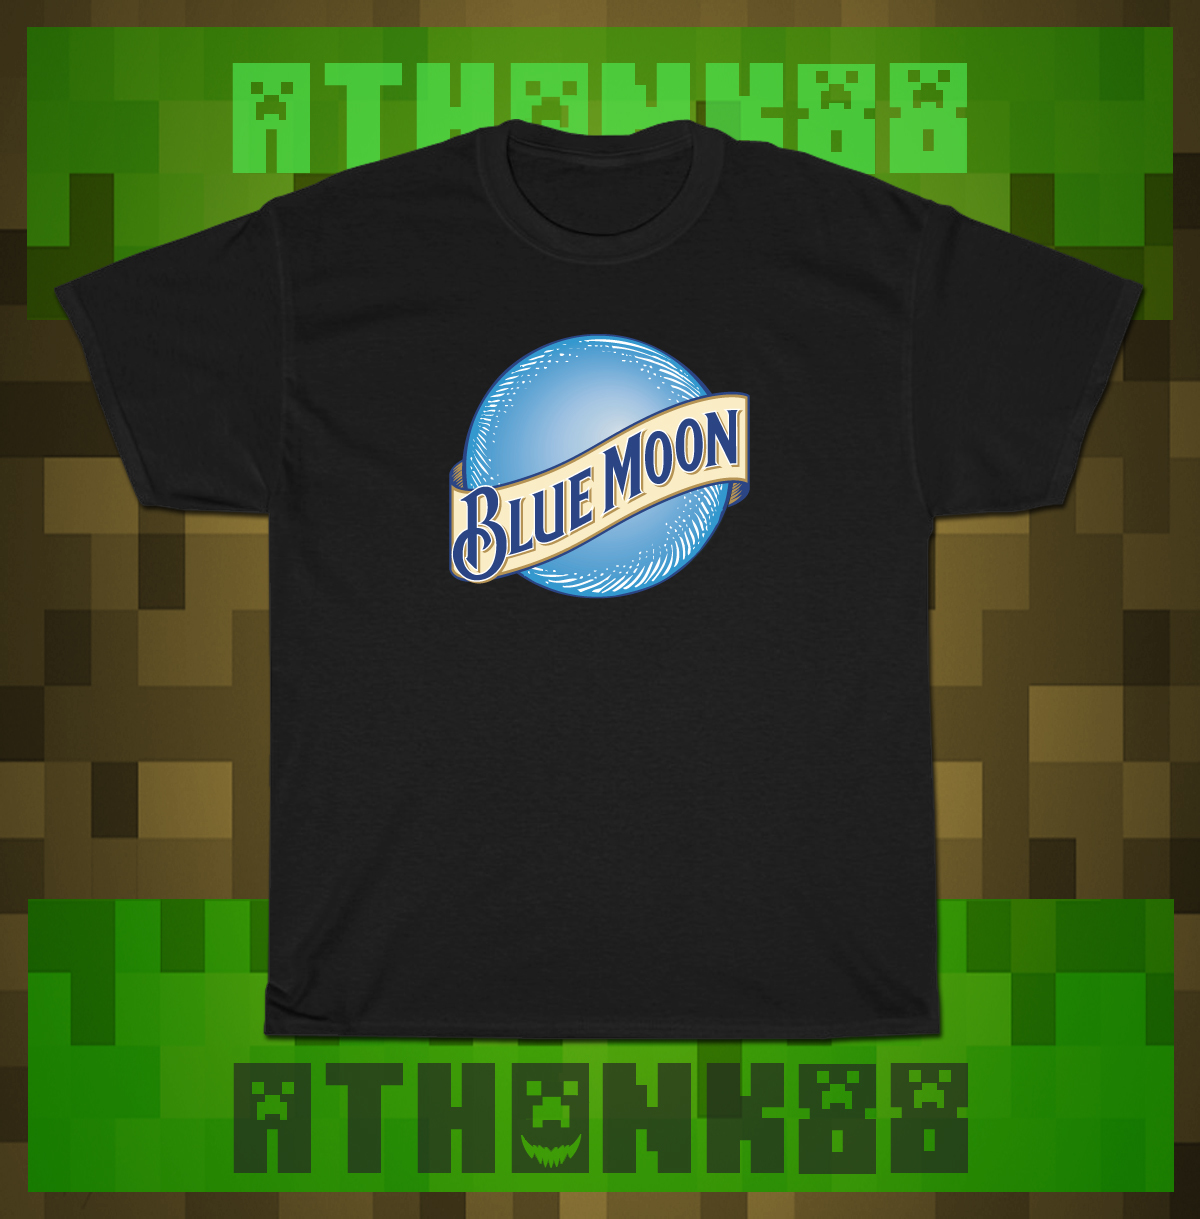 New Shirt Blue Moon Beer Logo Men's T-Shirt Free Shipping